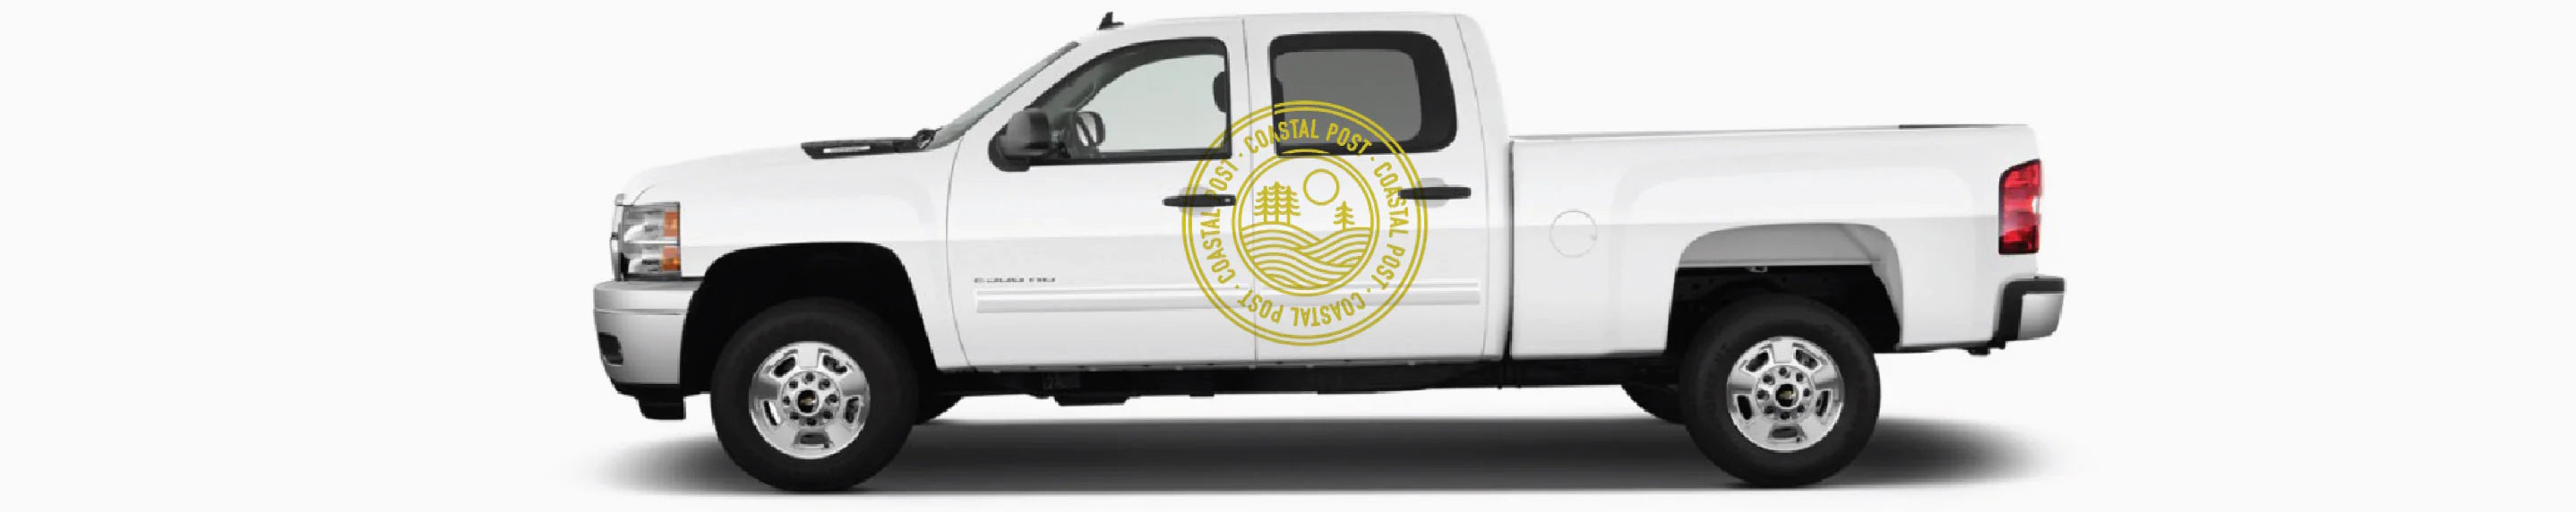 truck with Coastal post logo